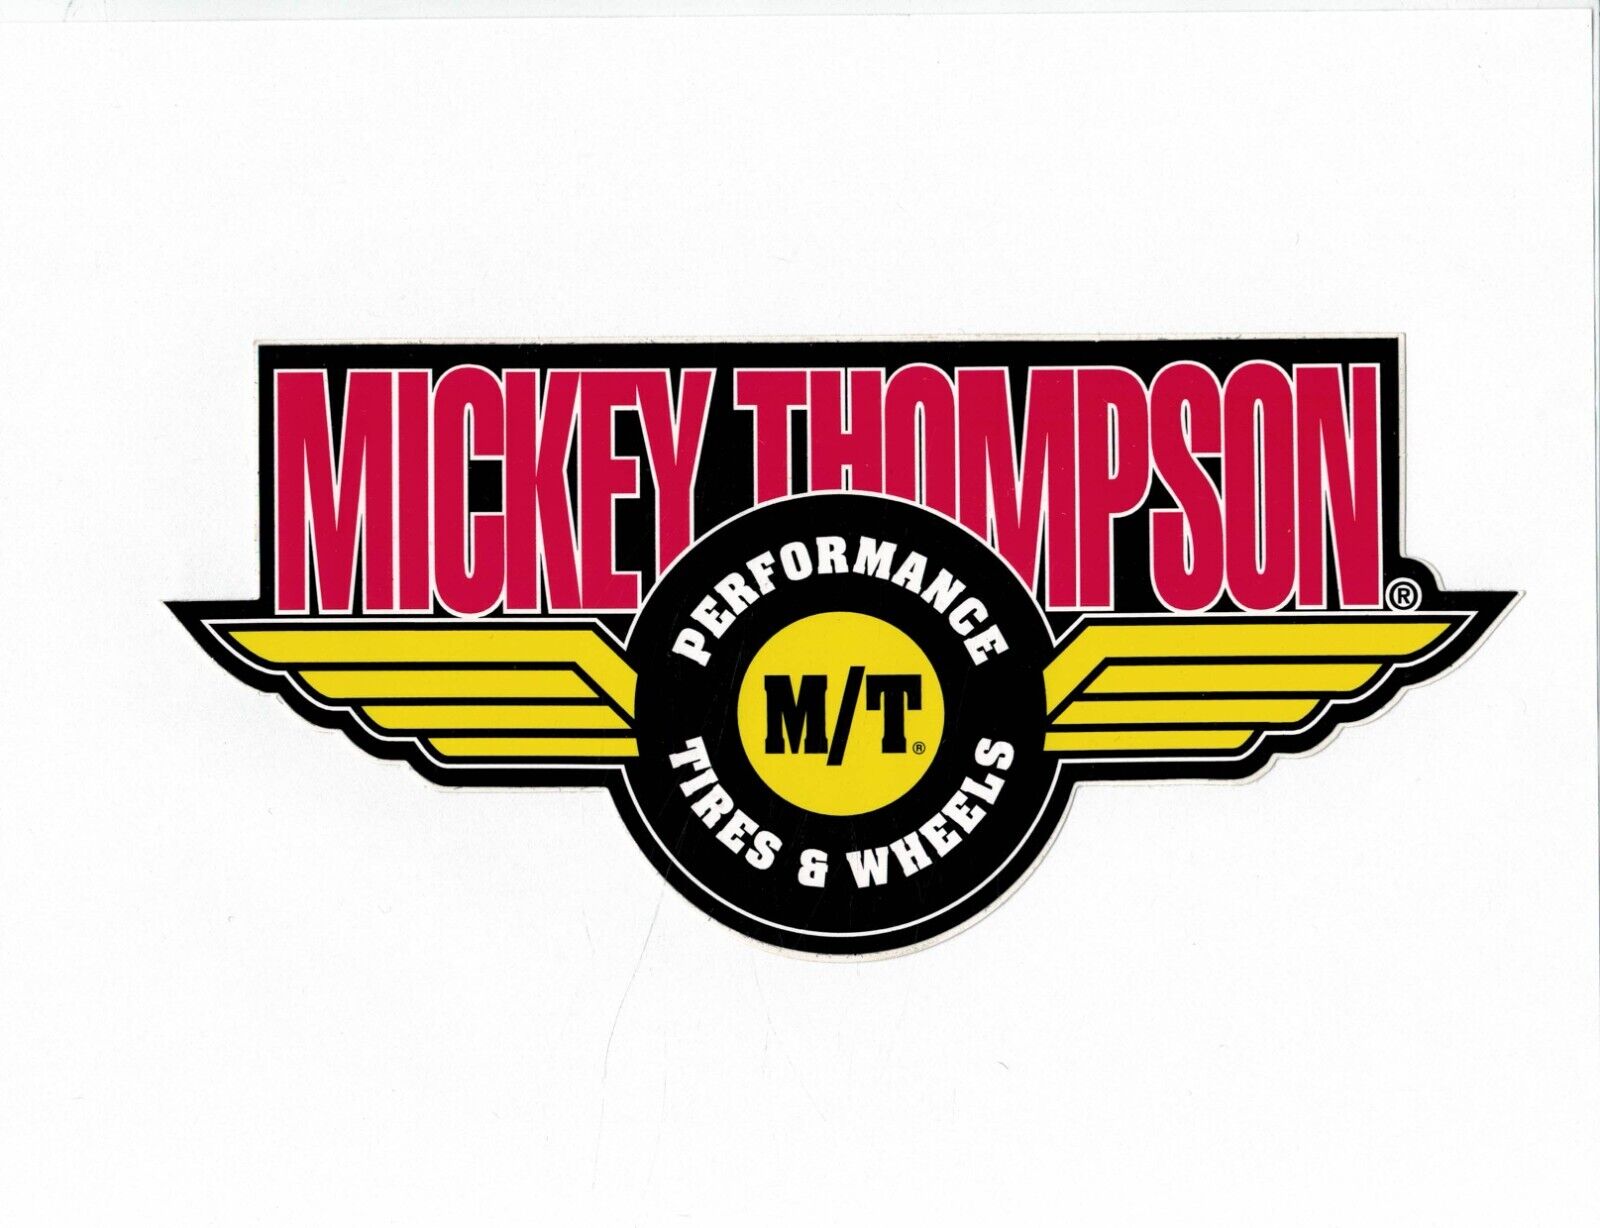 NOS MICKEY THOMPSON Performance Tires & Wheels Original Racing Decal/Sticker LG